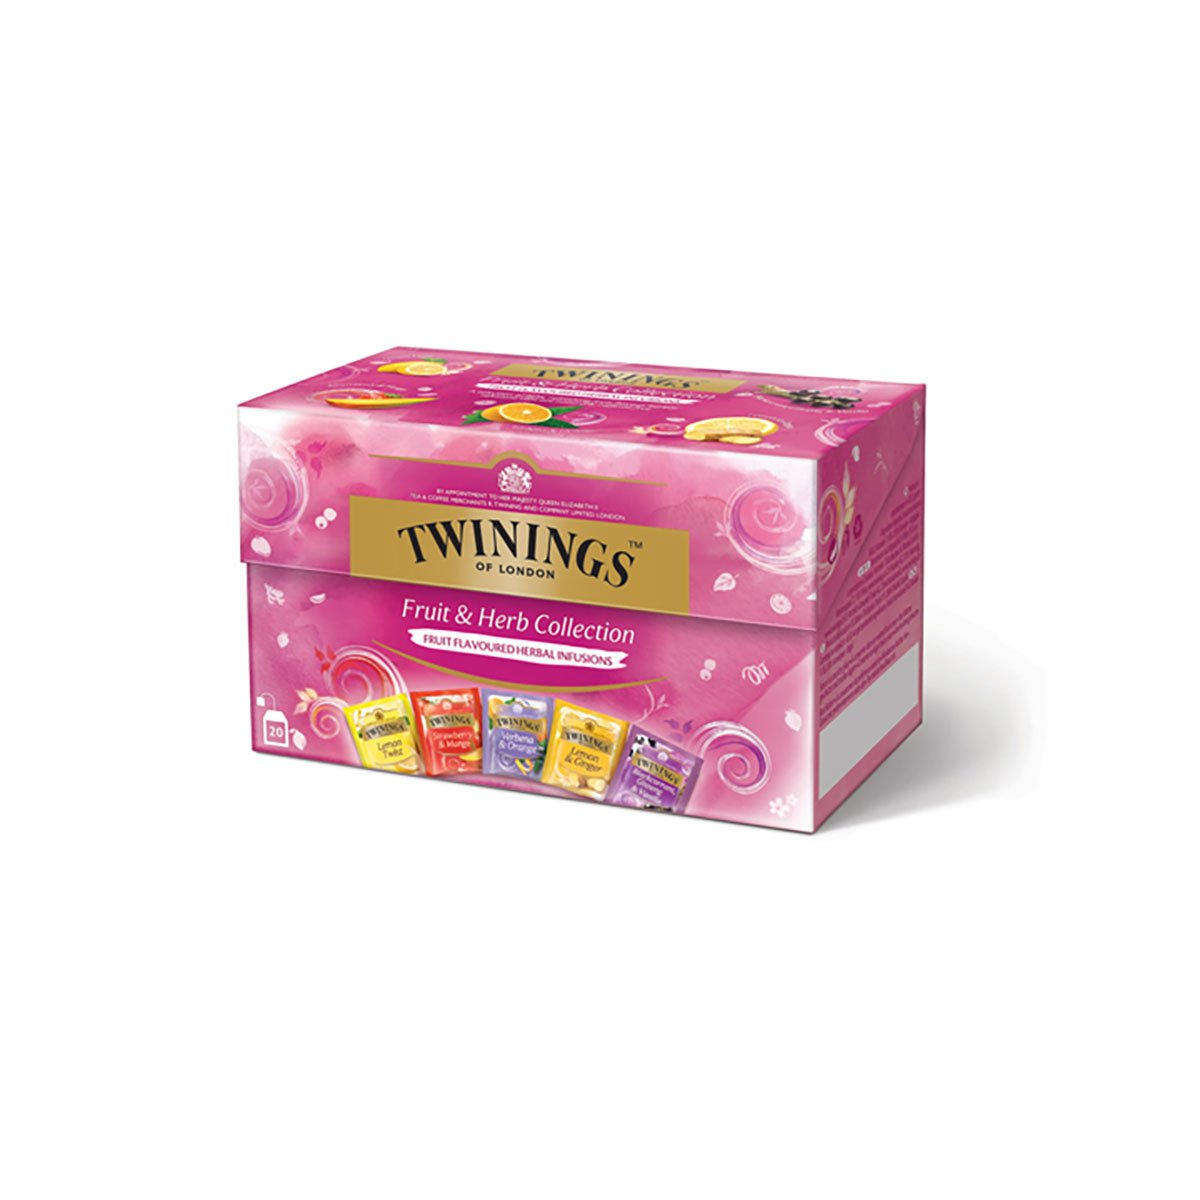 Ceai infuzie Mix 5 gusturi fructe si plante Twinings, 20 x 1.8 g imagine